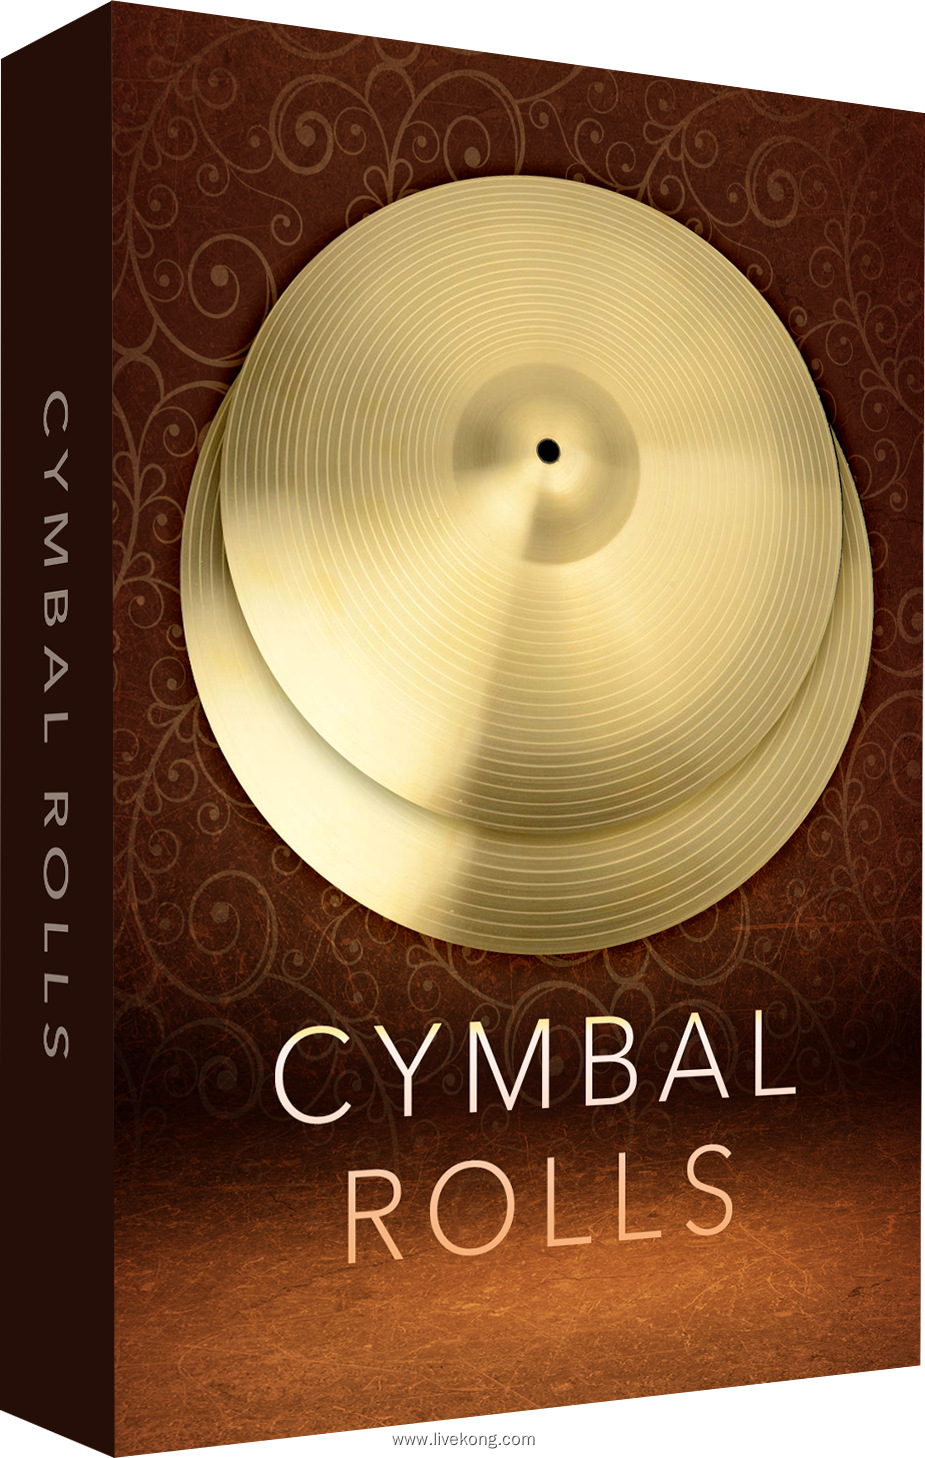 Cymbal roll shtuder